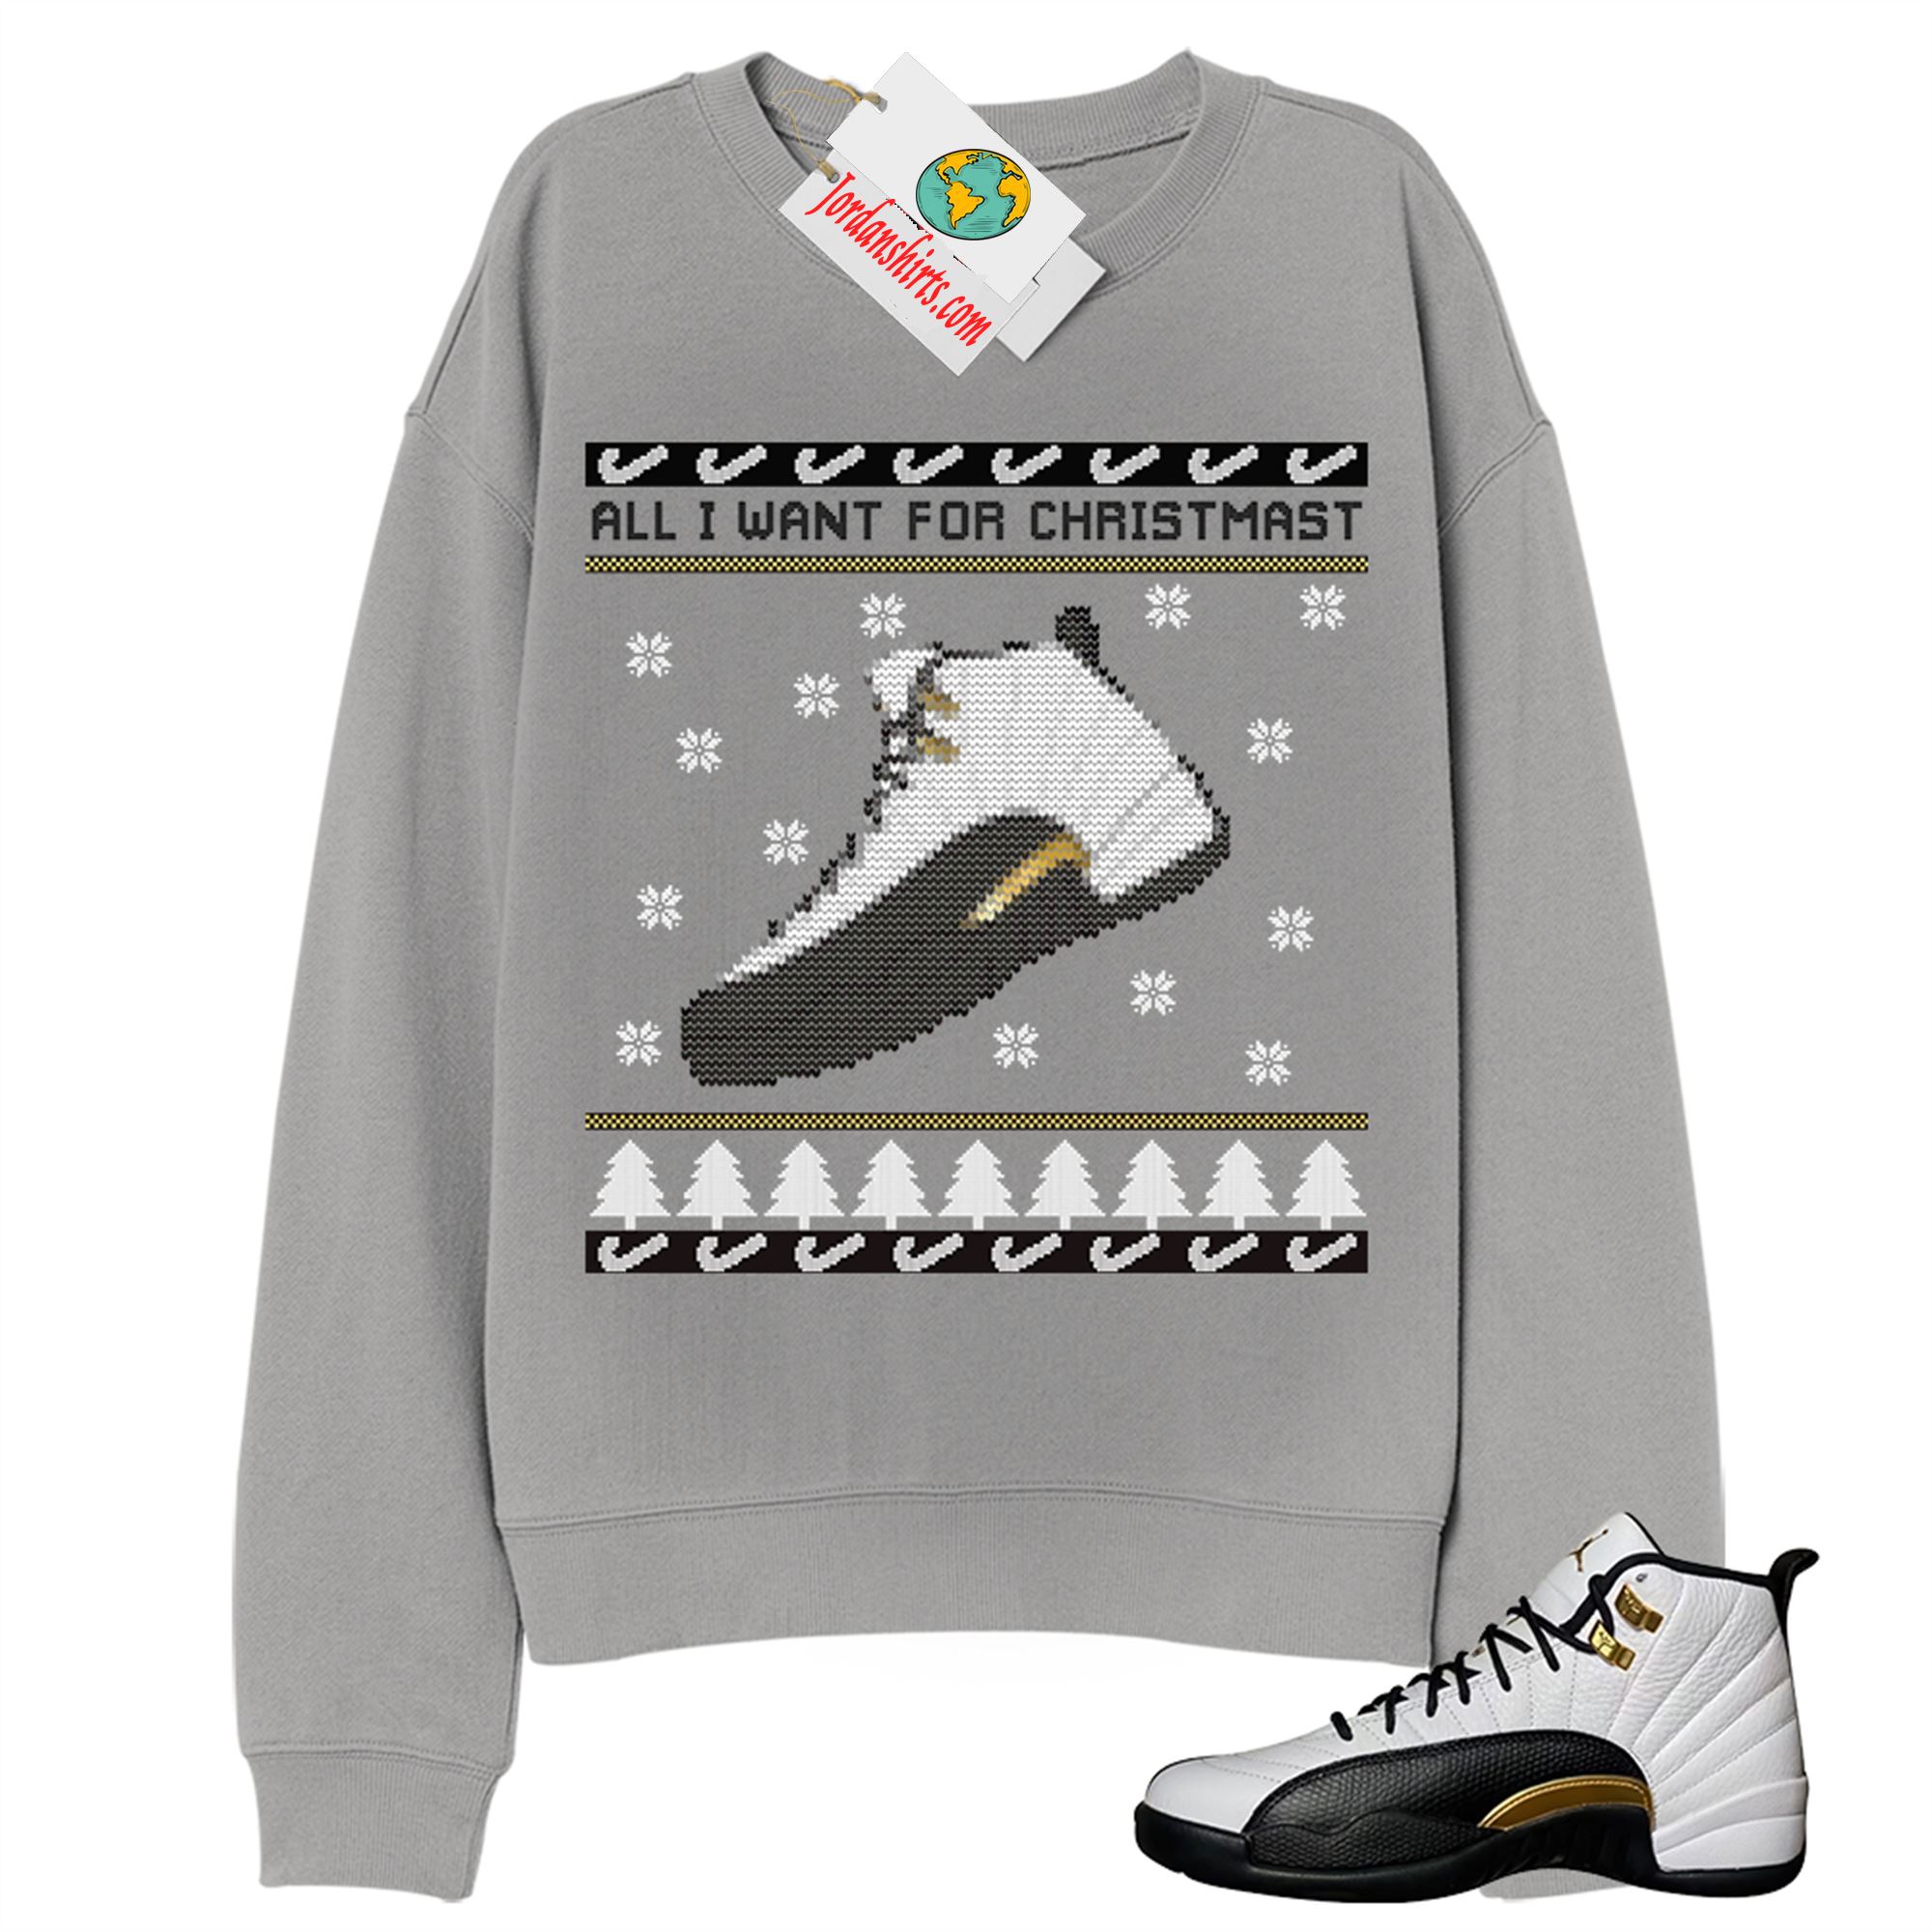 Jordan 12 Sweatshirt, Sneaker Ugly Christmas Shirt Grey Sweatshirt Air Jordan 12 Royalty 12s Plus Size Up To 5xl